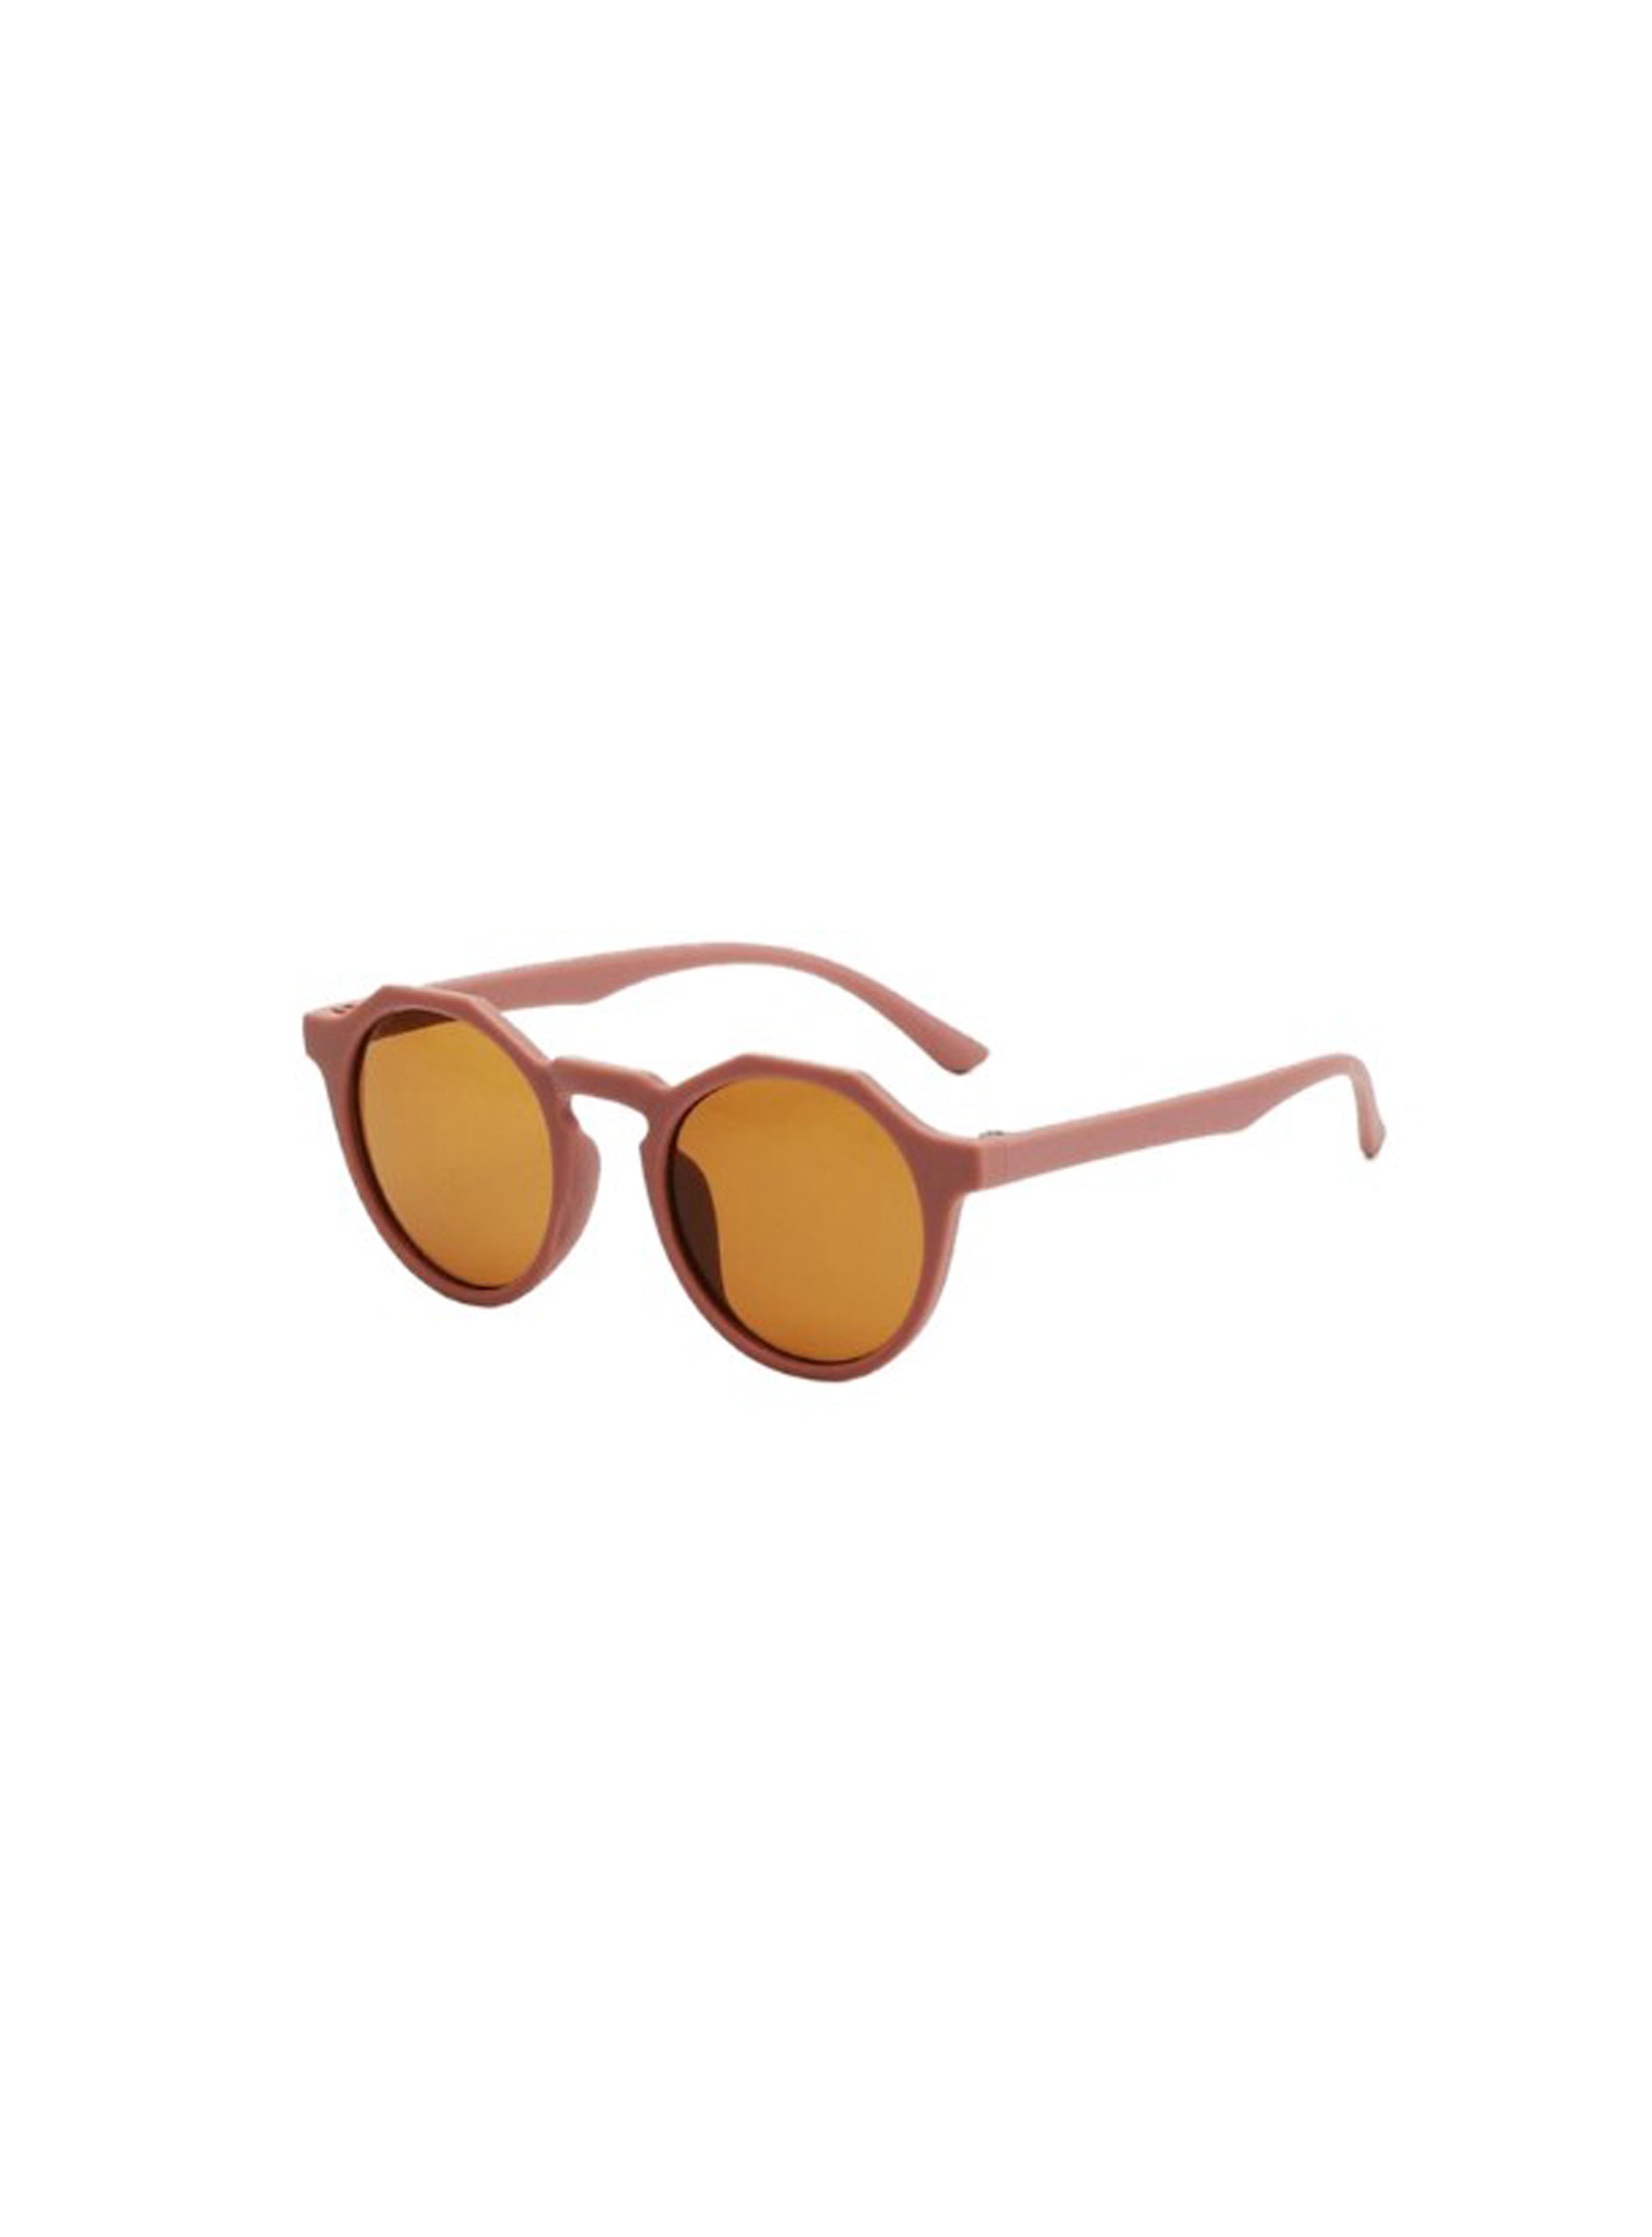 chiselled terracotta sunglasses